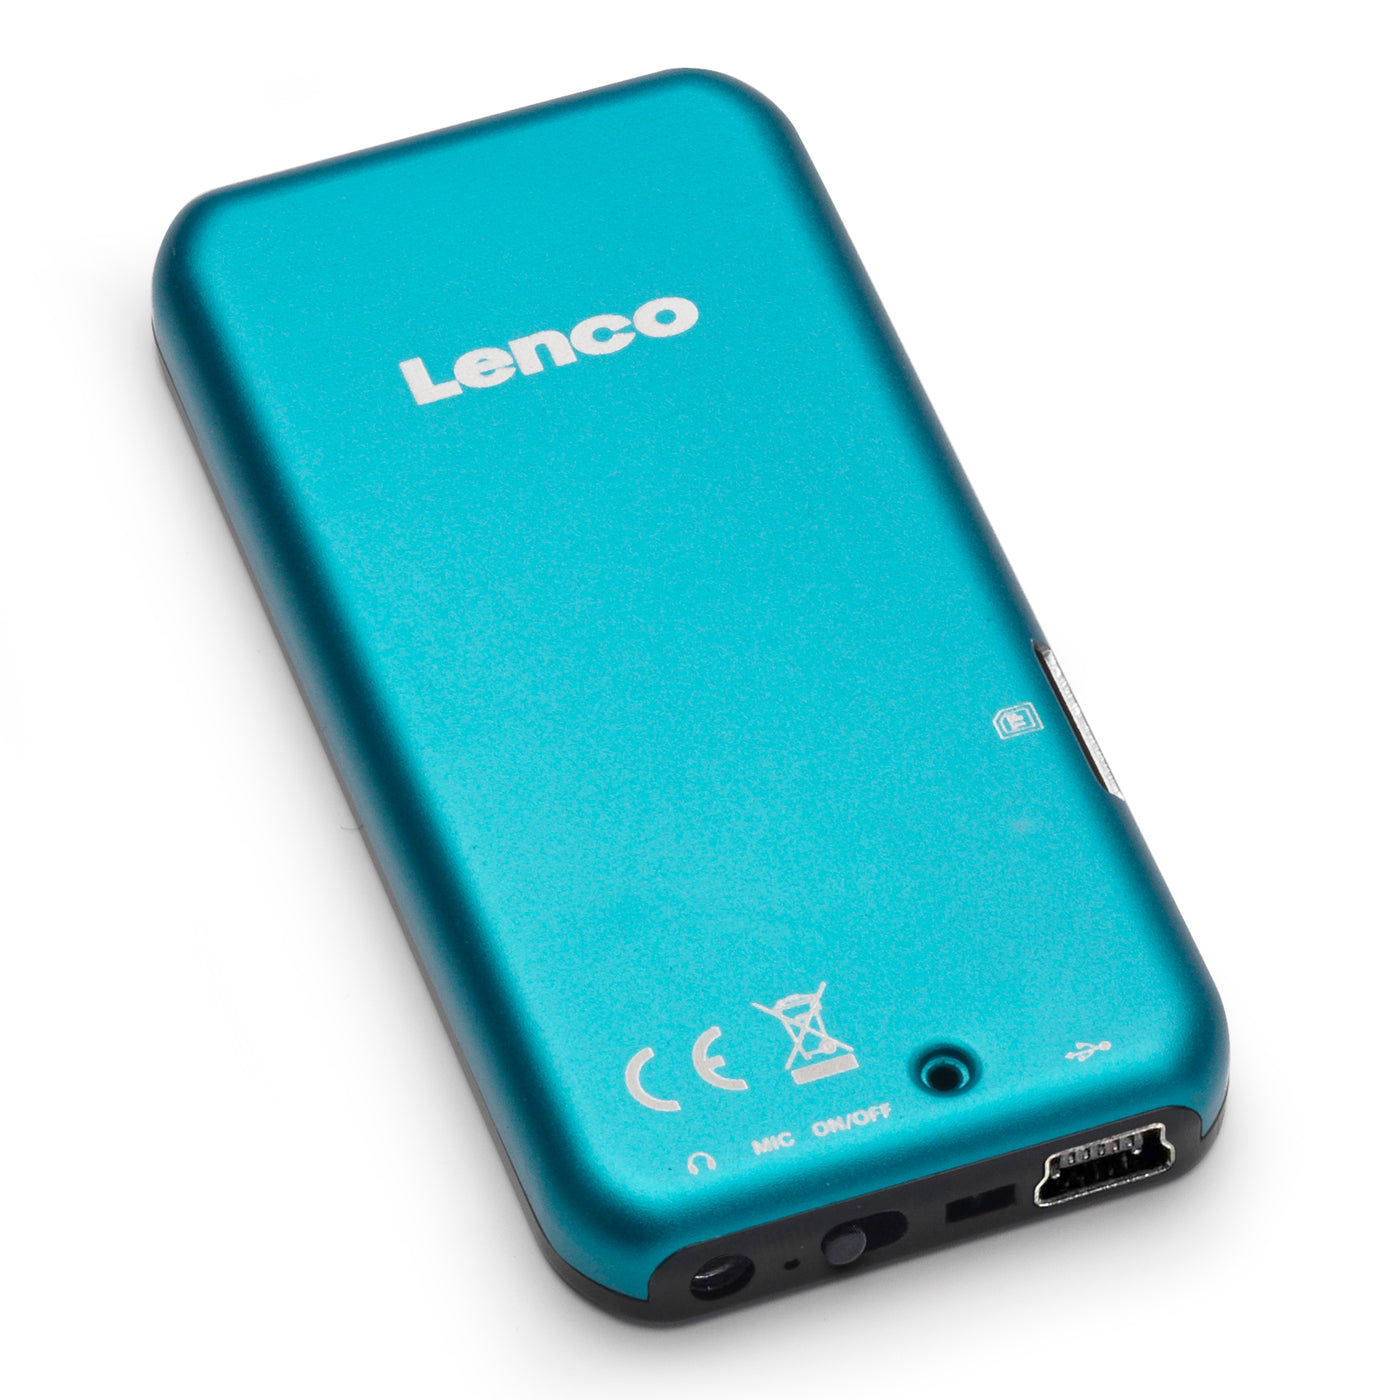 LENCO Xemio-655 Blue - MP3/MP4 Player with 4GB memory - Blue